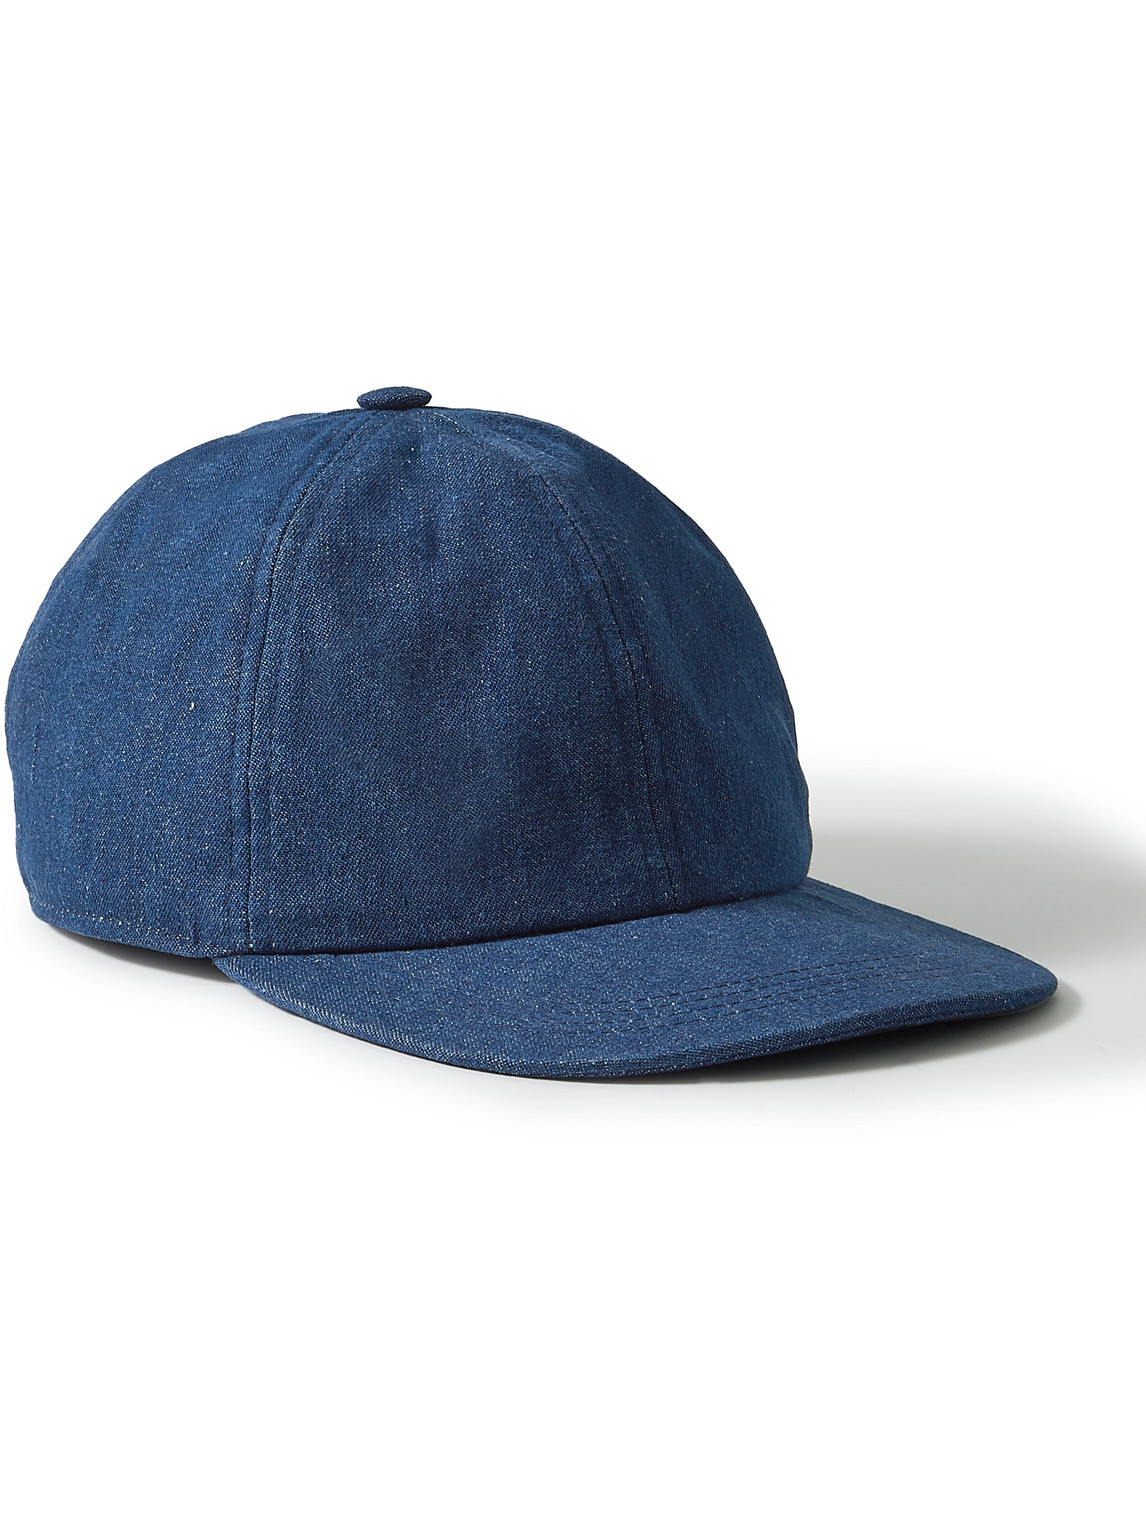 Lock & Co Hatters Rimini Cotton Baseball Cap In Blue